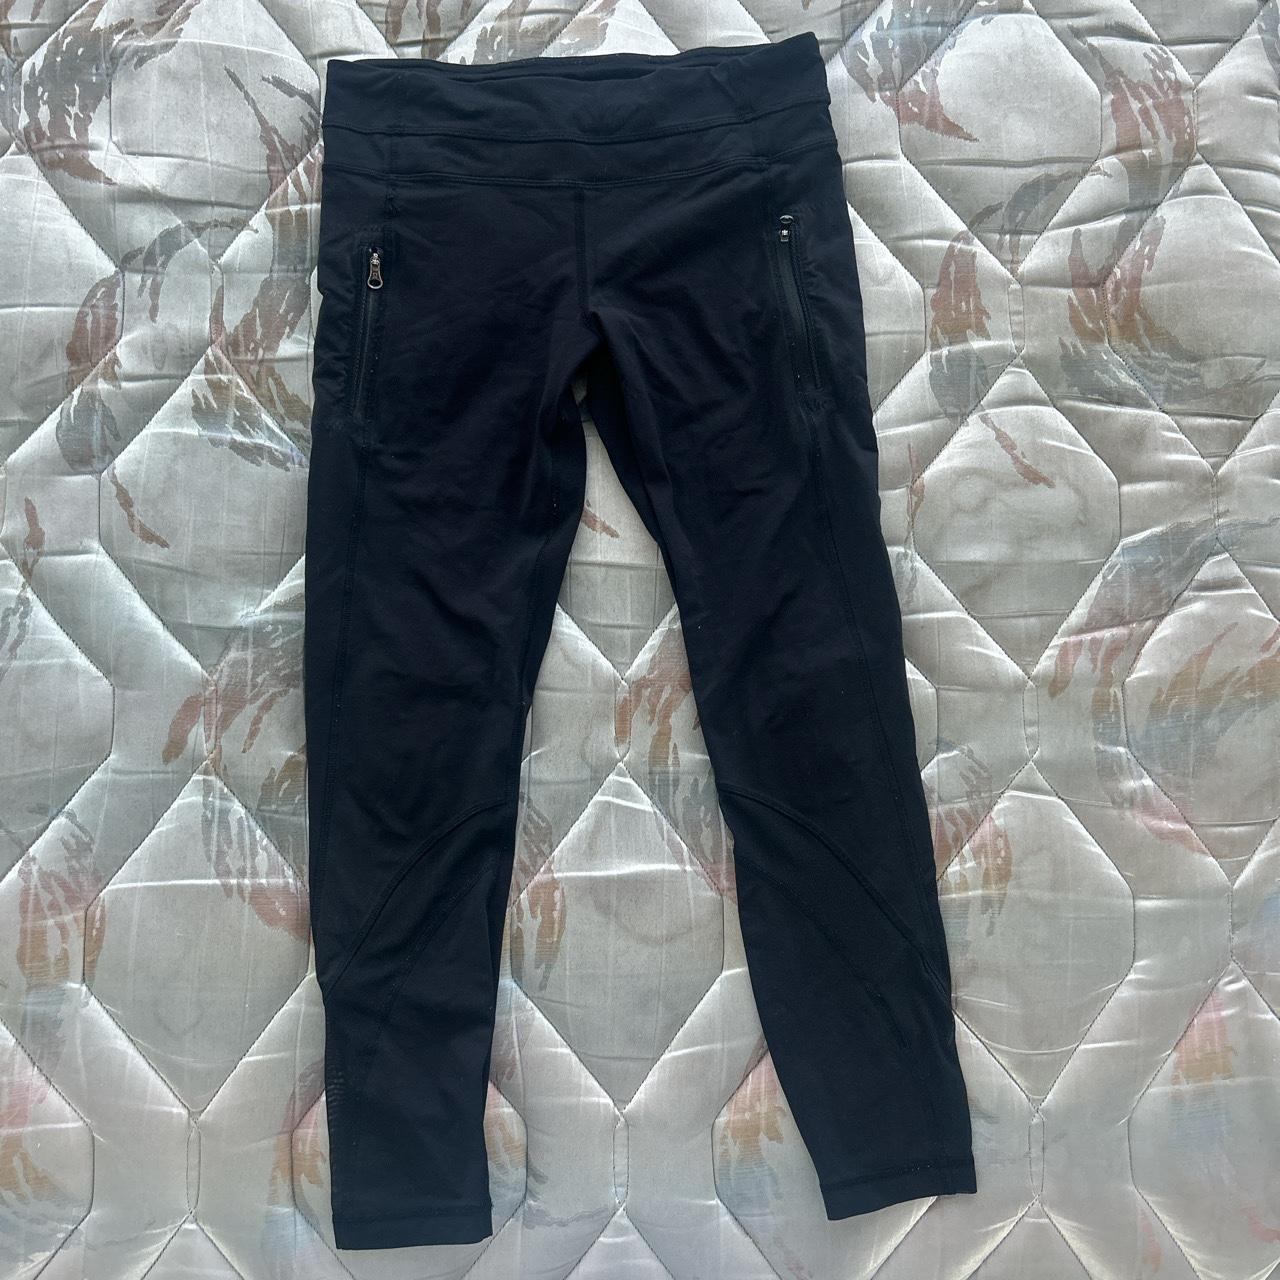 black lululemon leggings with pockets and mesh on - Depop